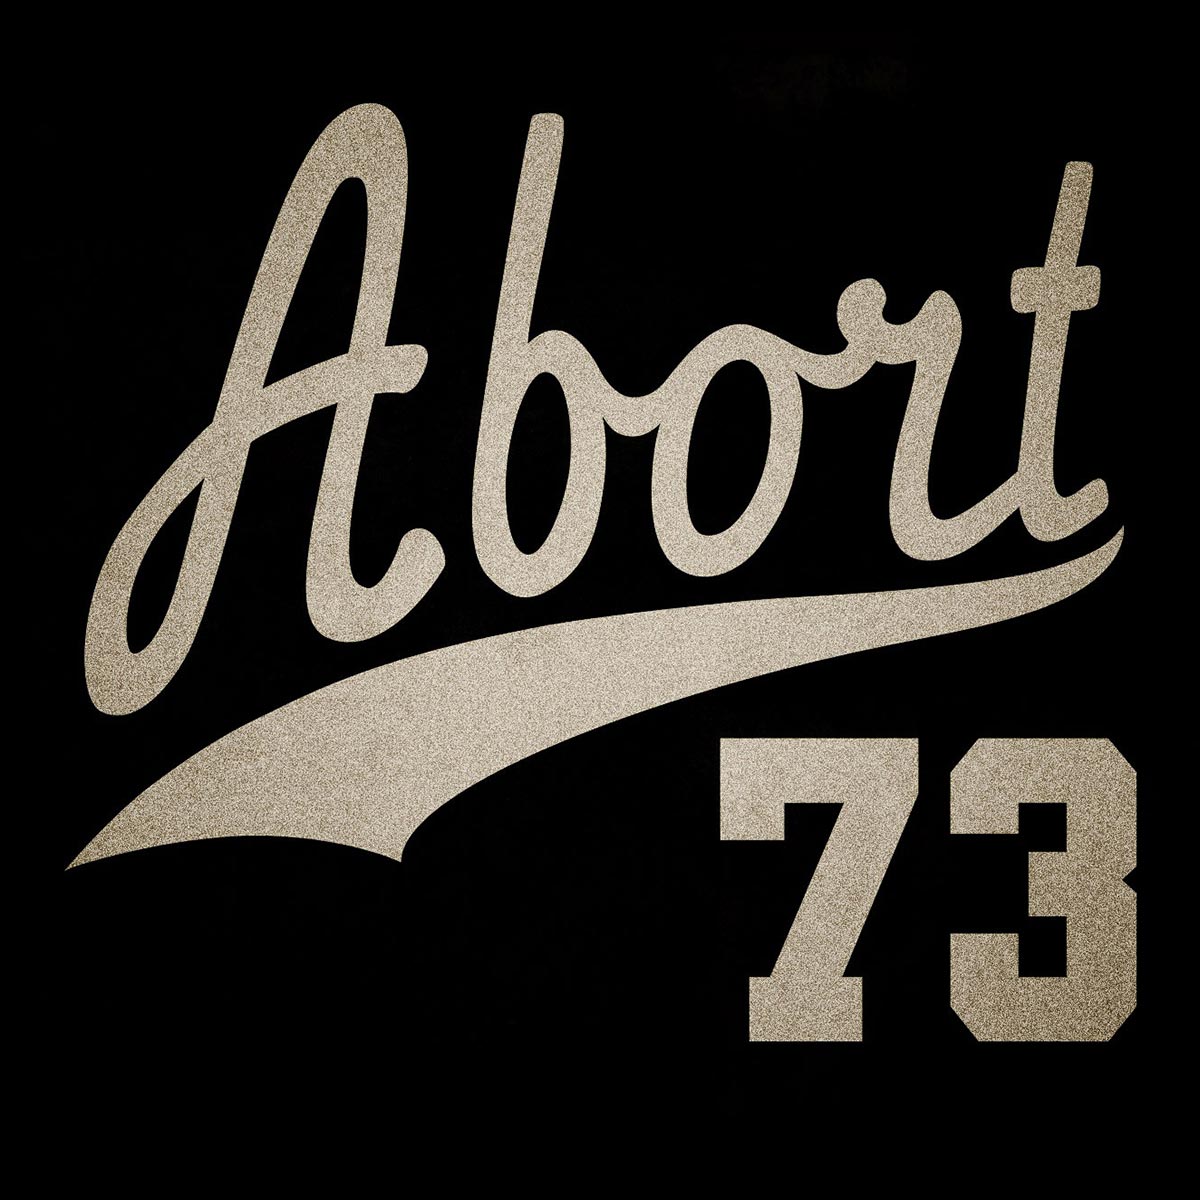 Abort73 (Vandy)